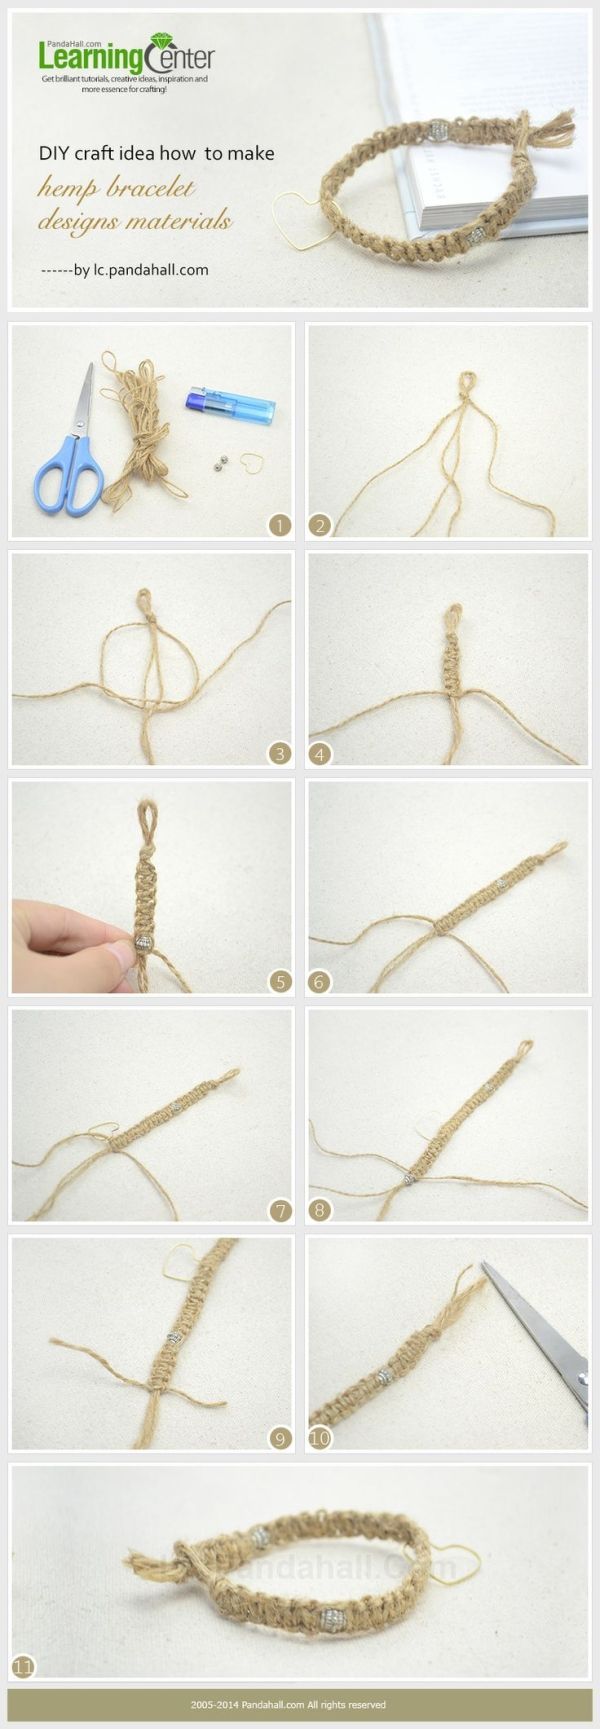 How to Make Friendship Bracelets With Hemp Cord